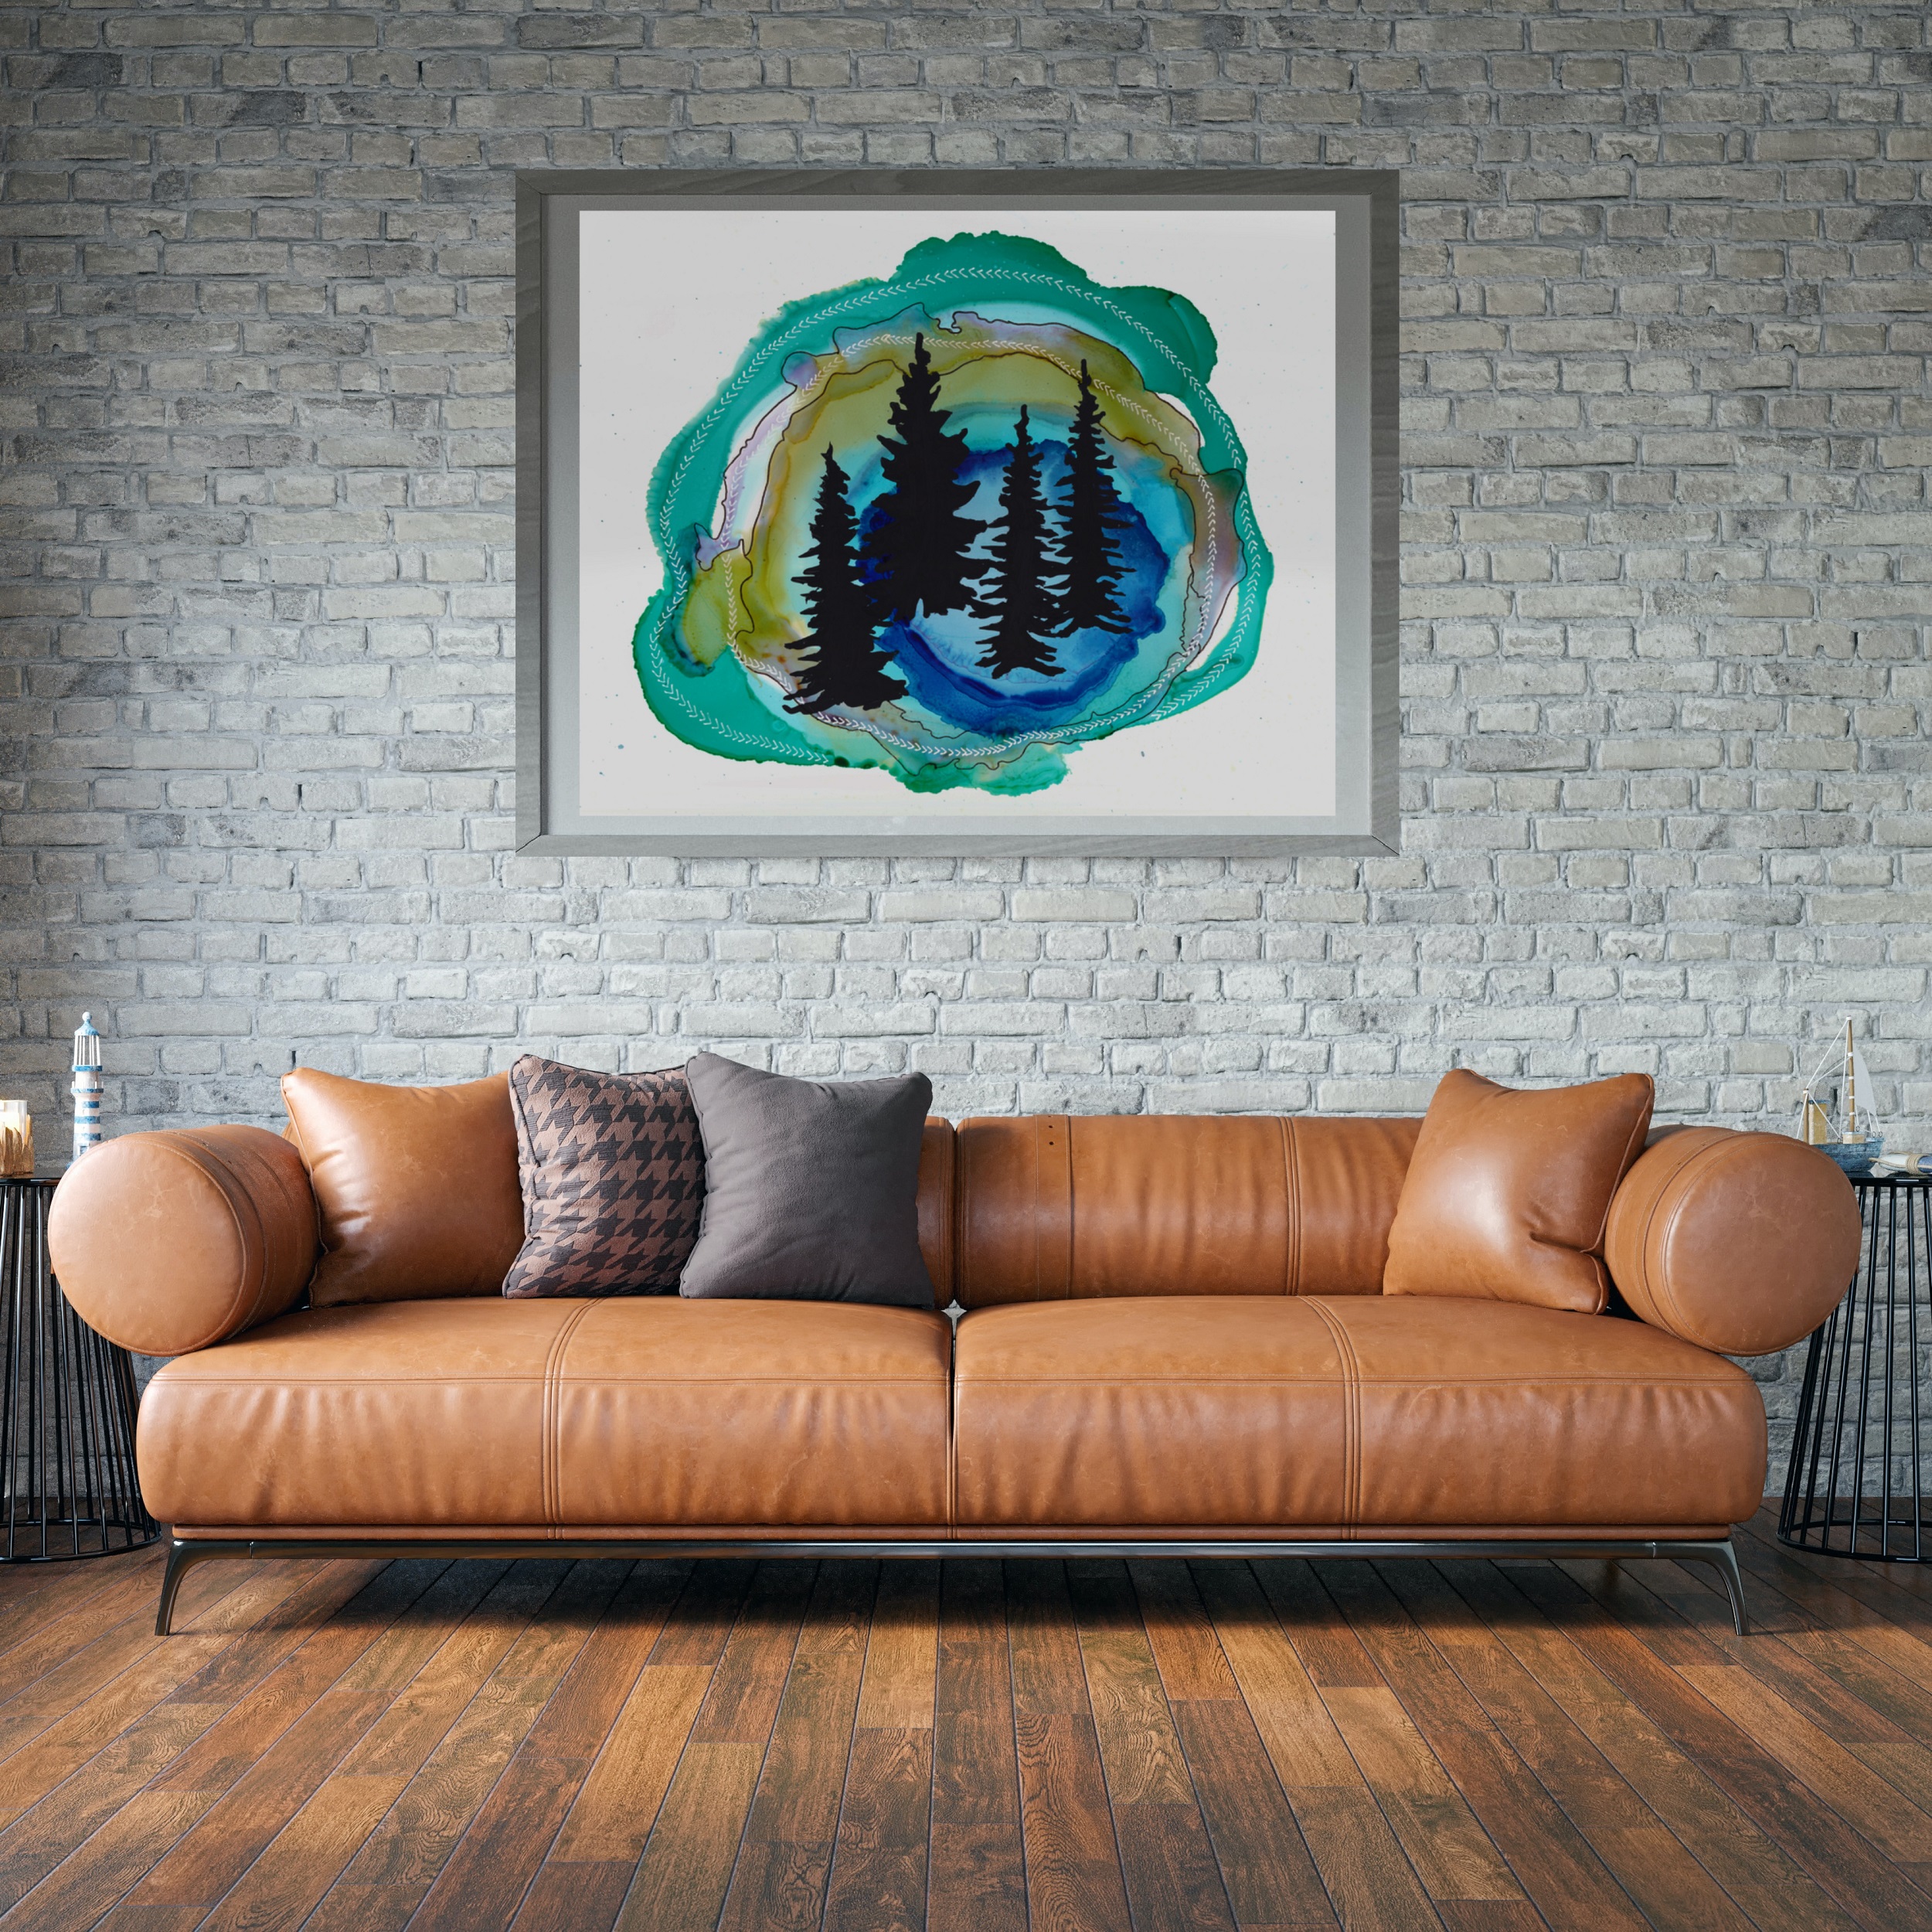 woods pine tree art in living room